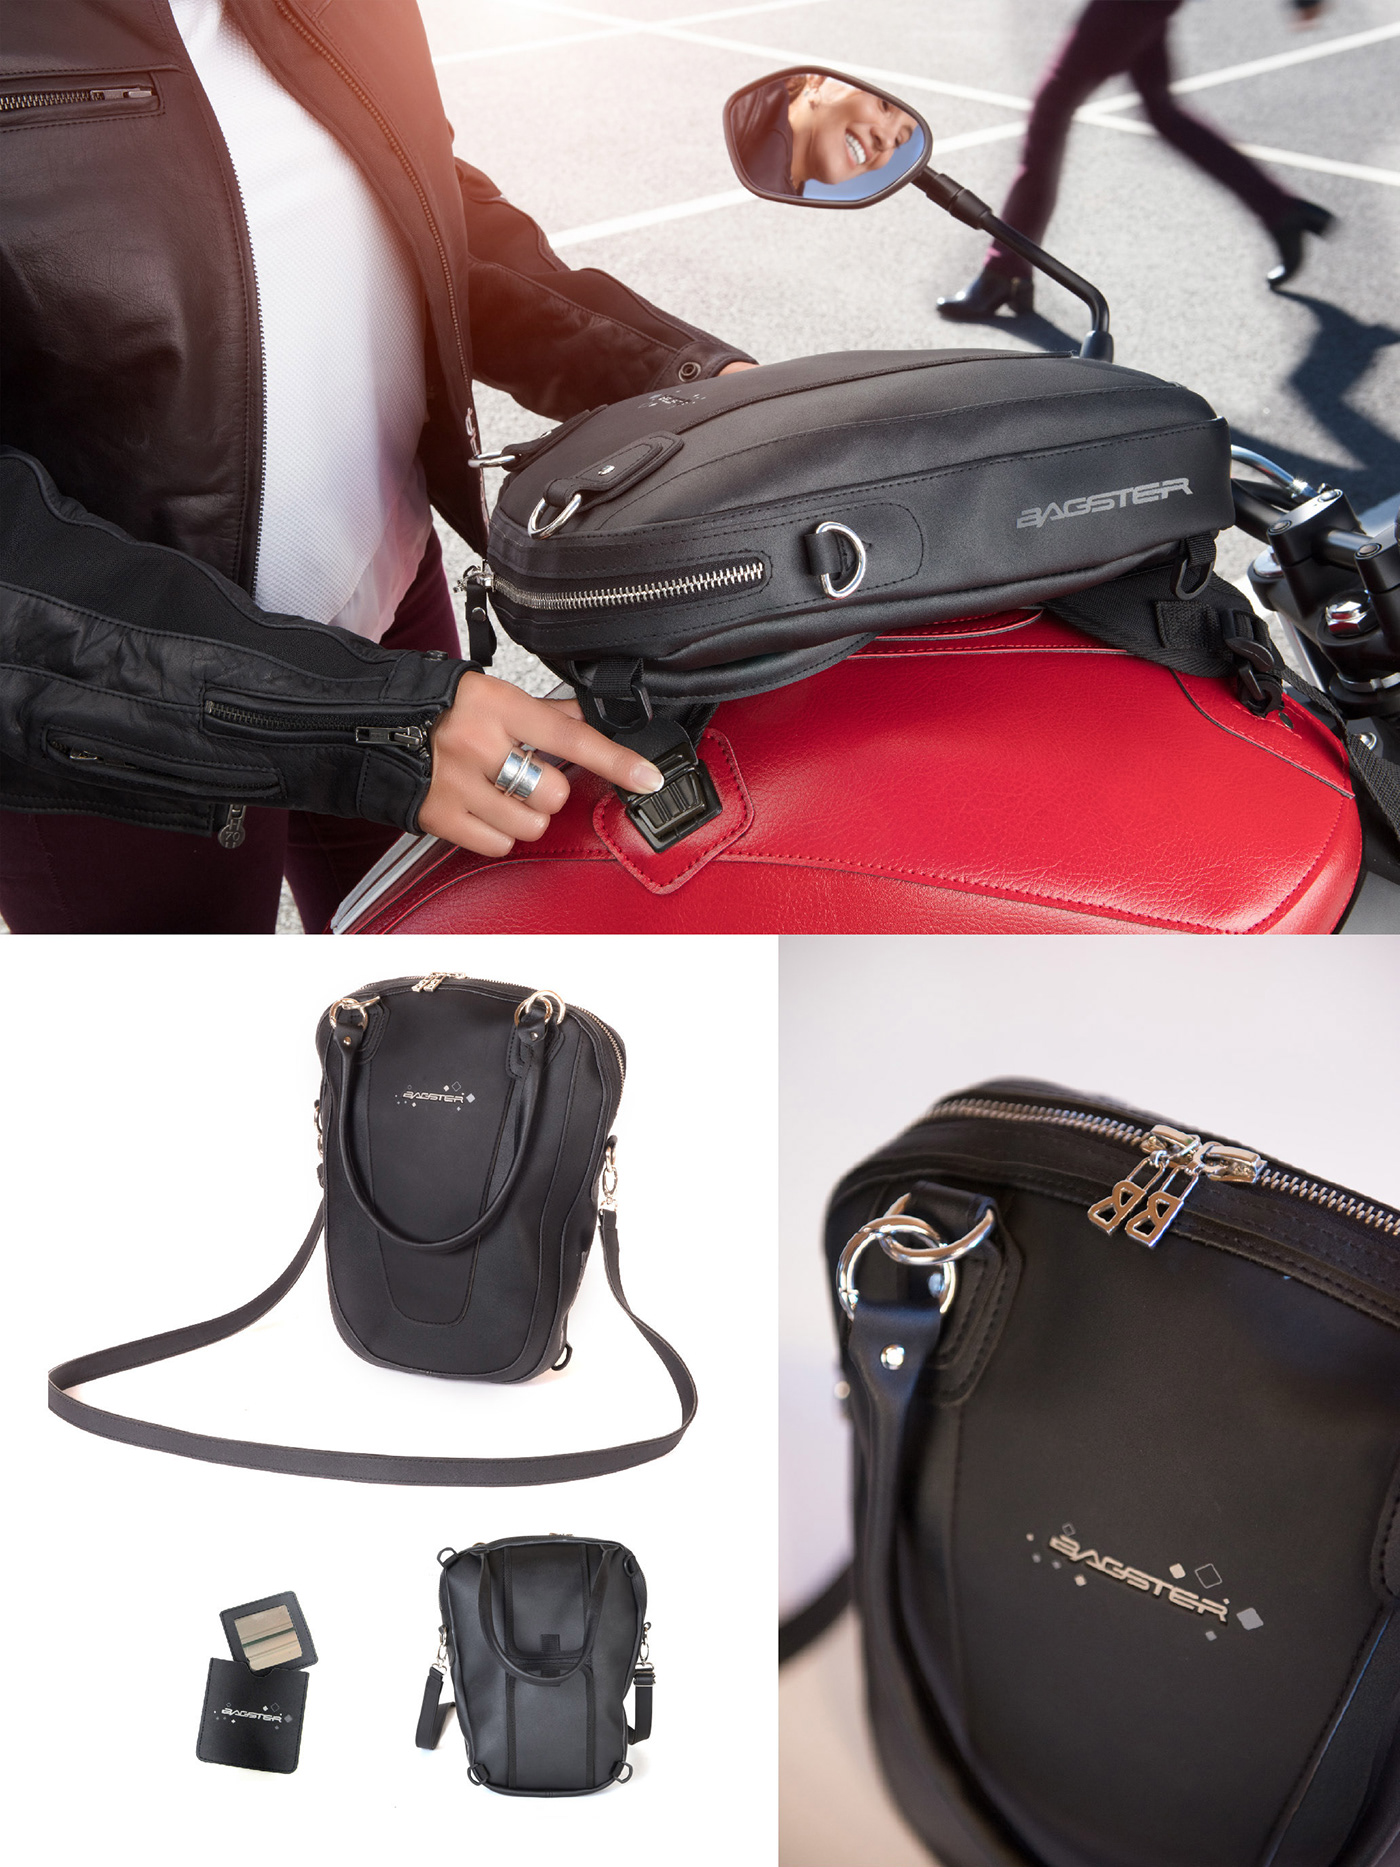 design conception PEUGEOT django women bag Accessory leather motrcycle luggage rack graphic design 